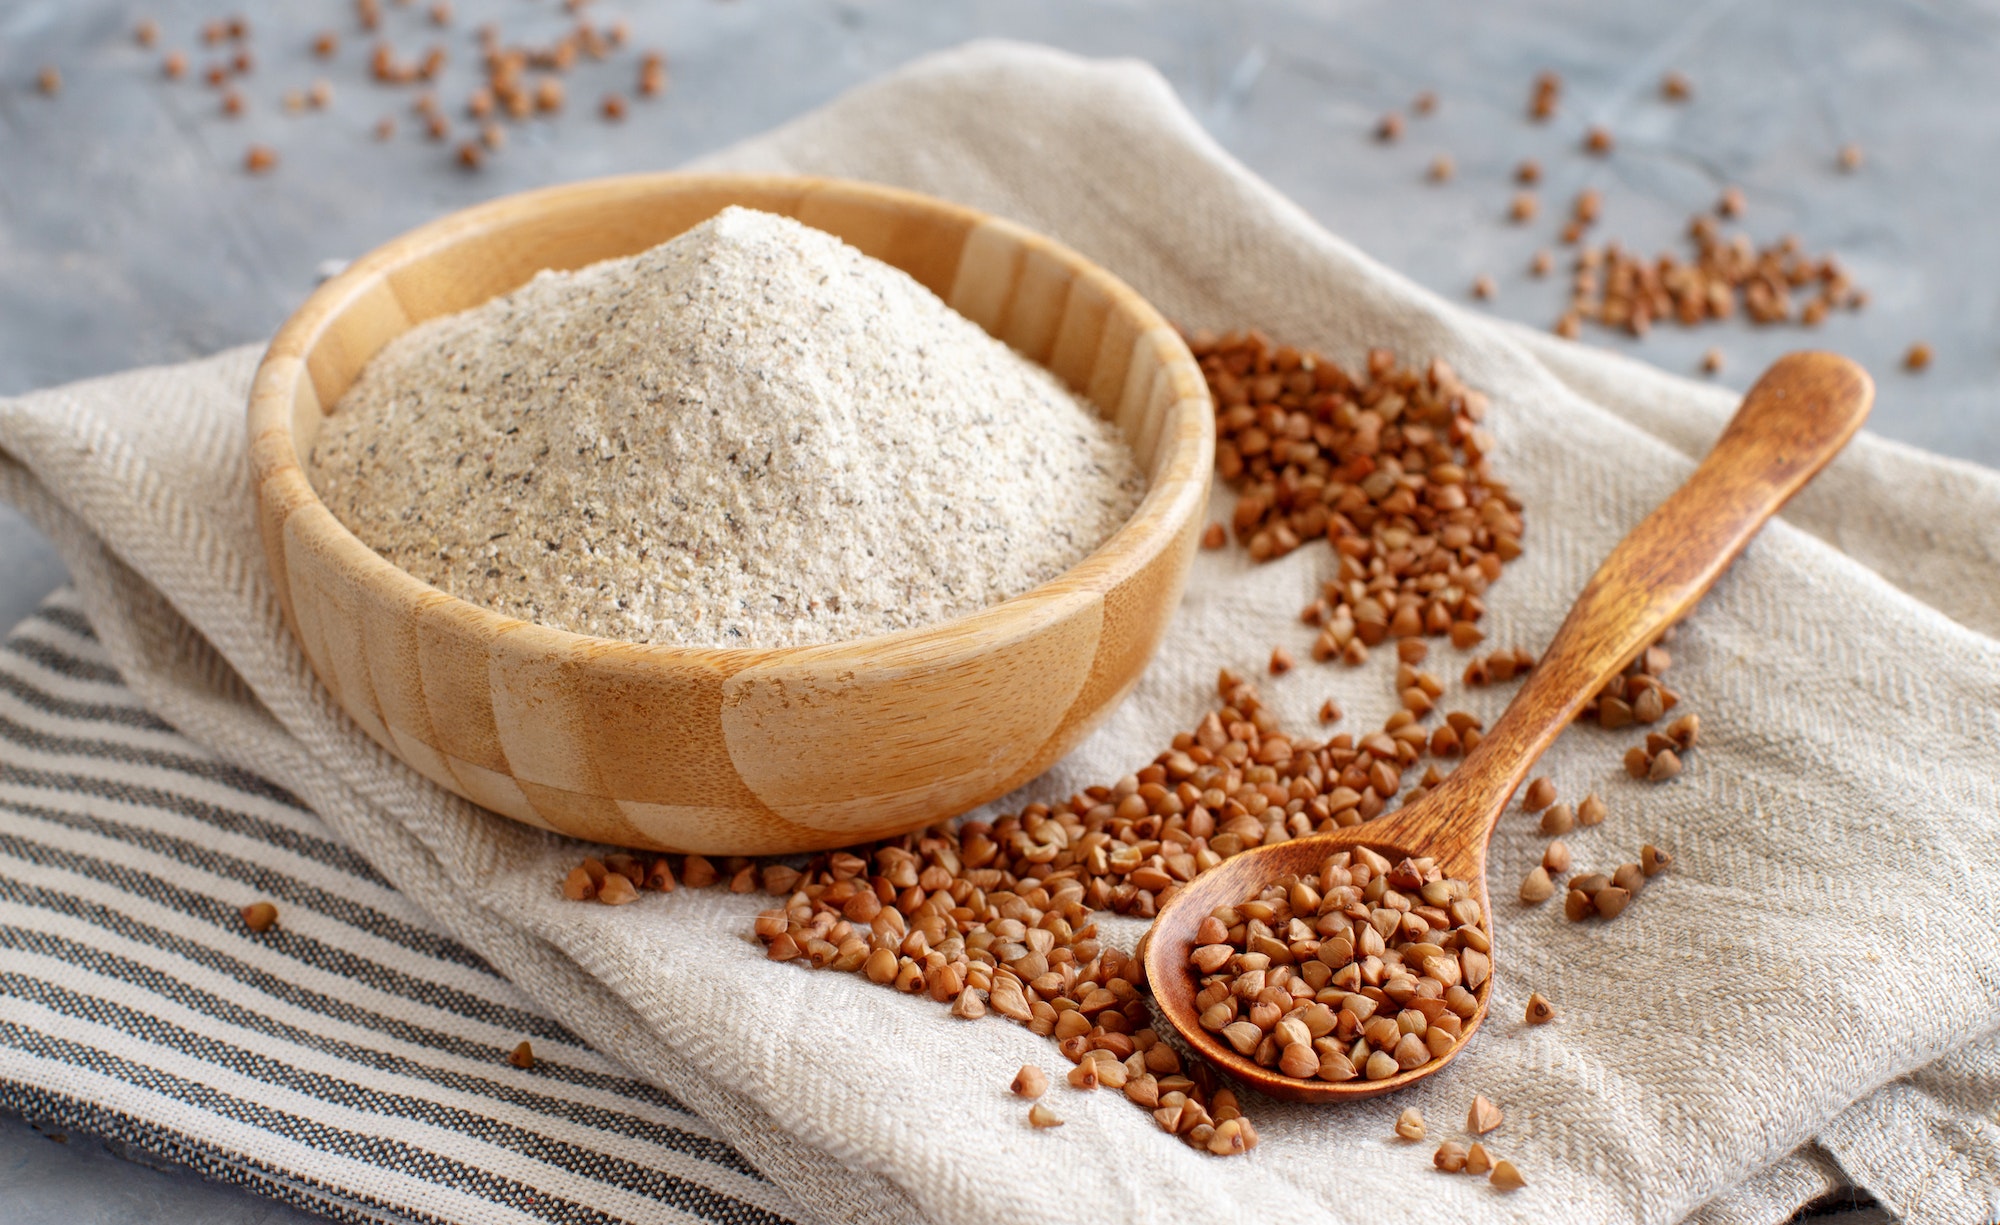 Buckwheat flour in a bowl and buckwheat grain in a spoon